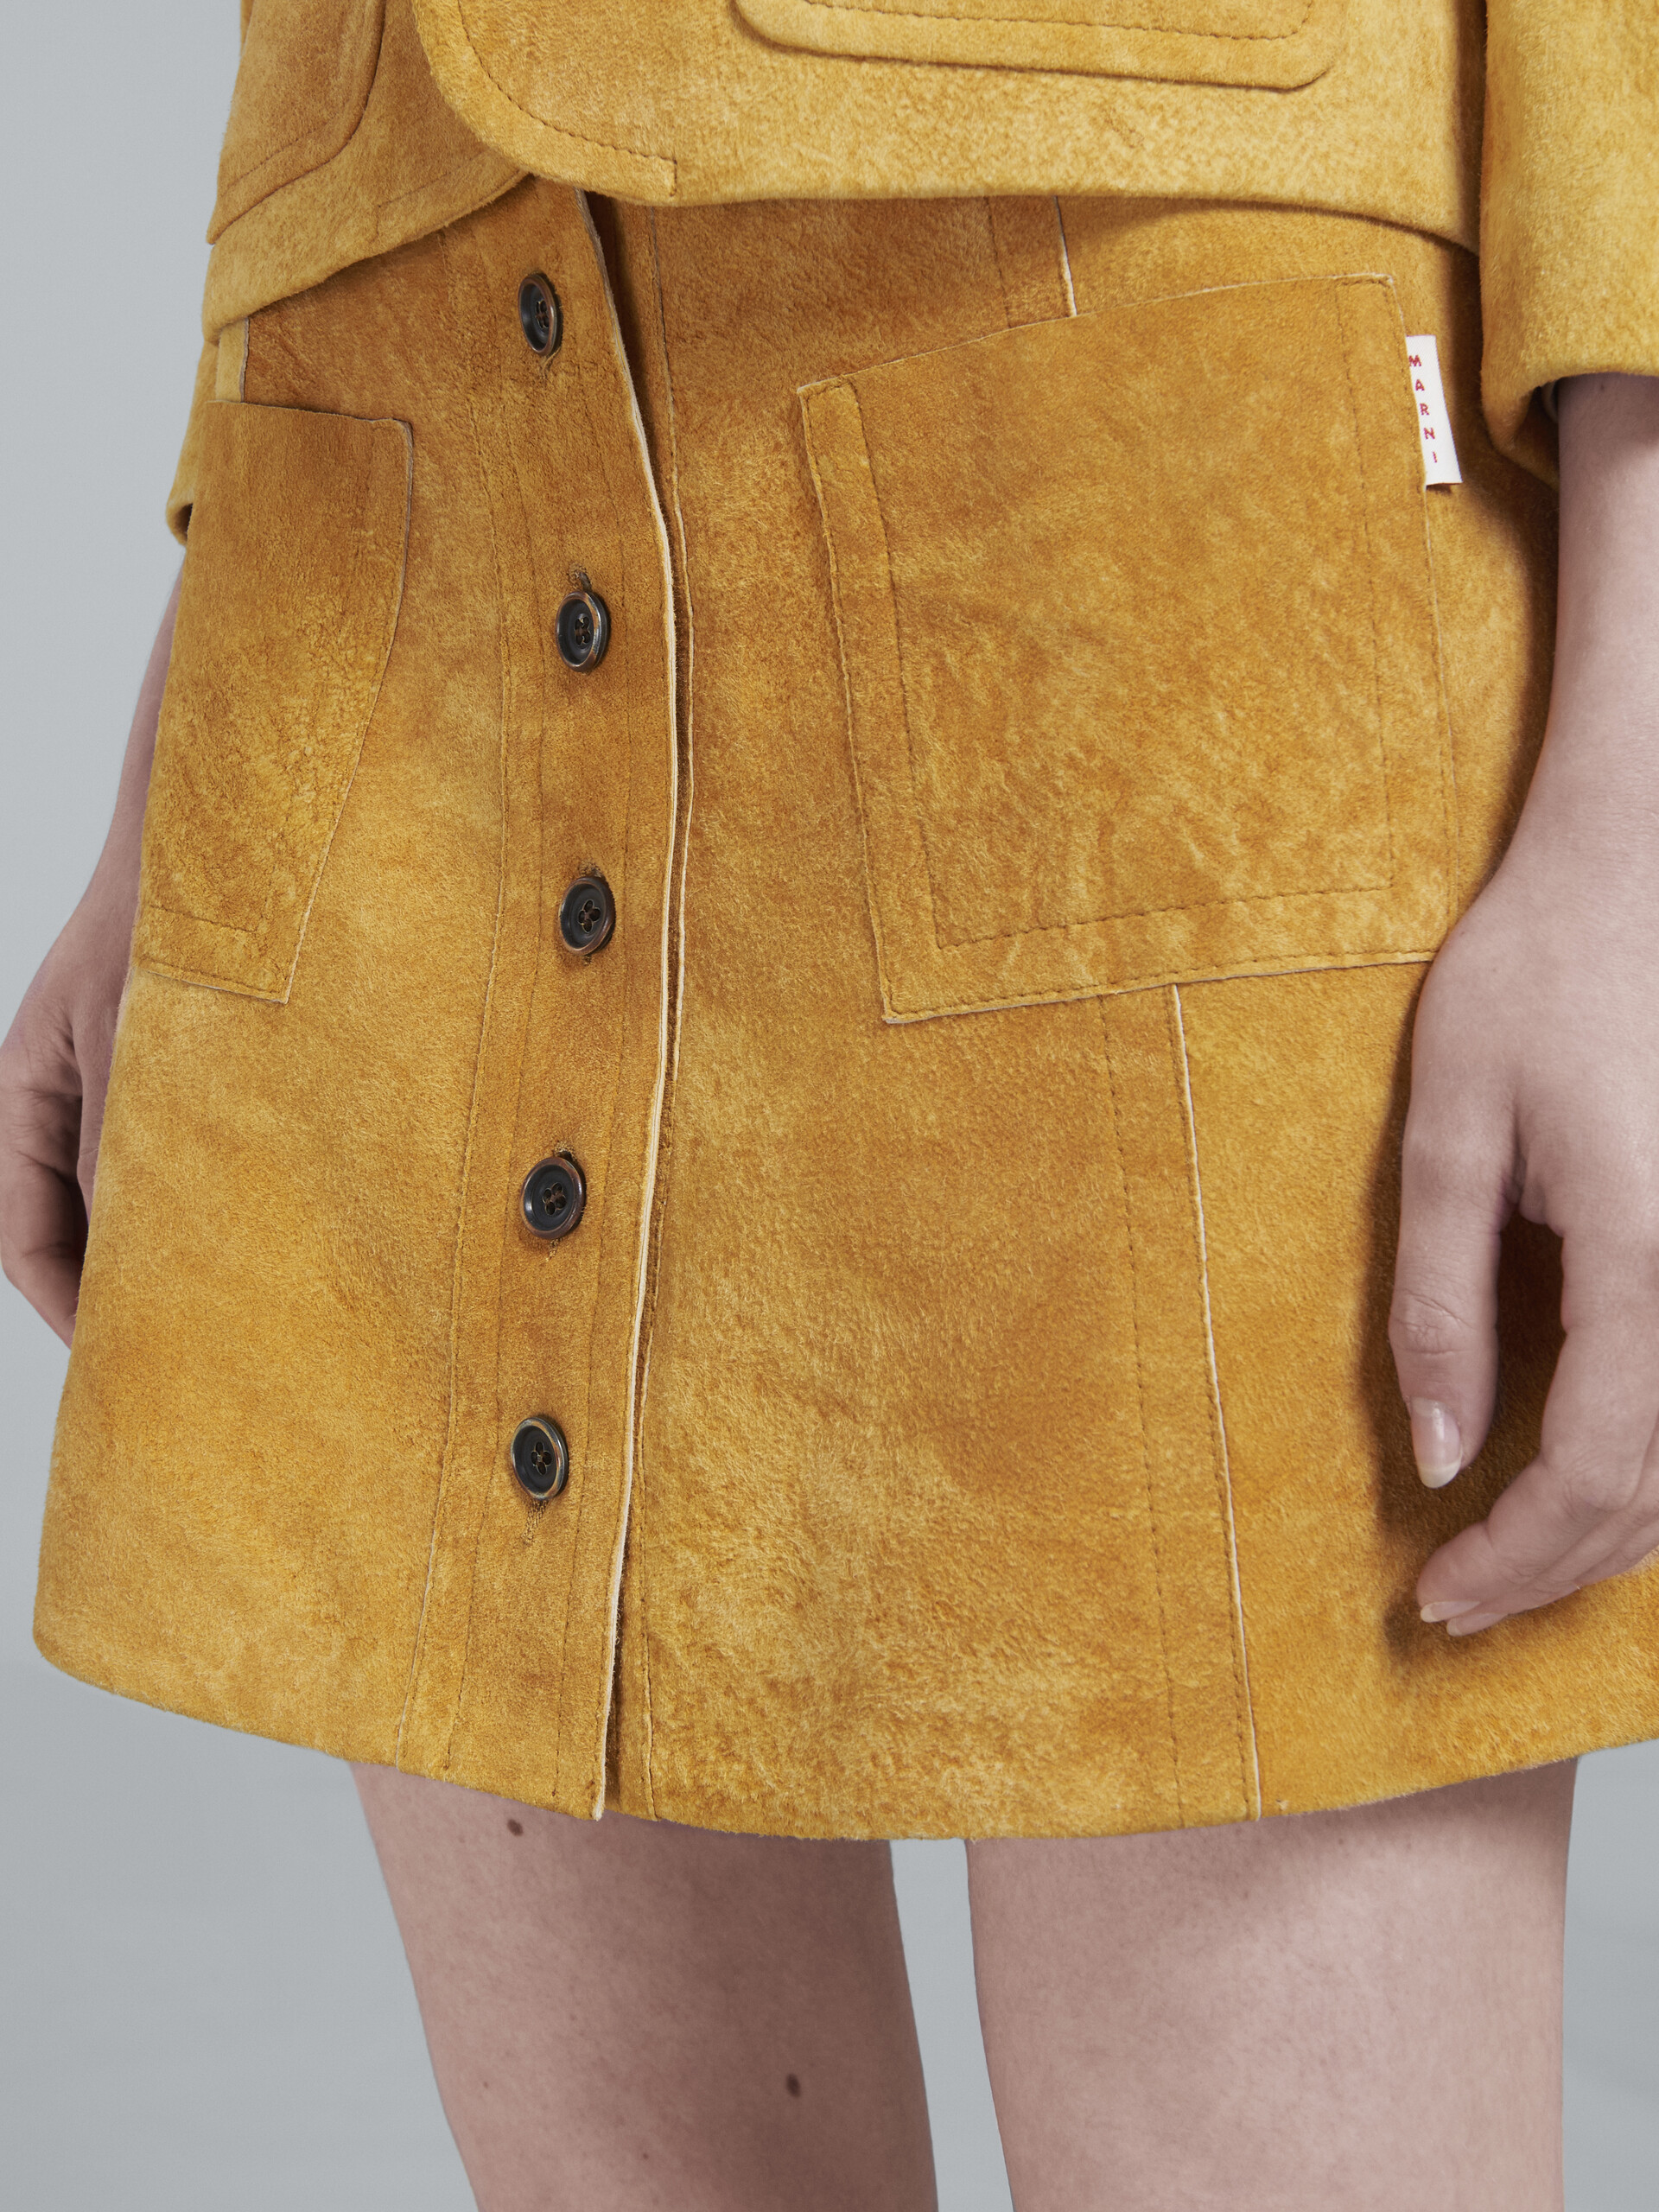 Light orange leather skirt - Skirts - Image 4